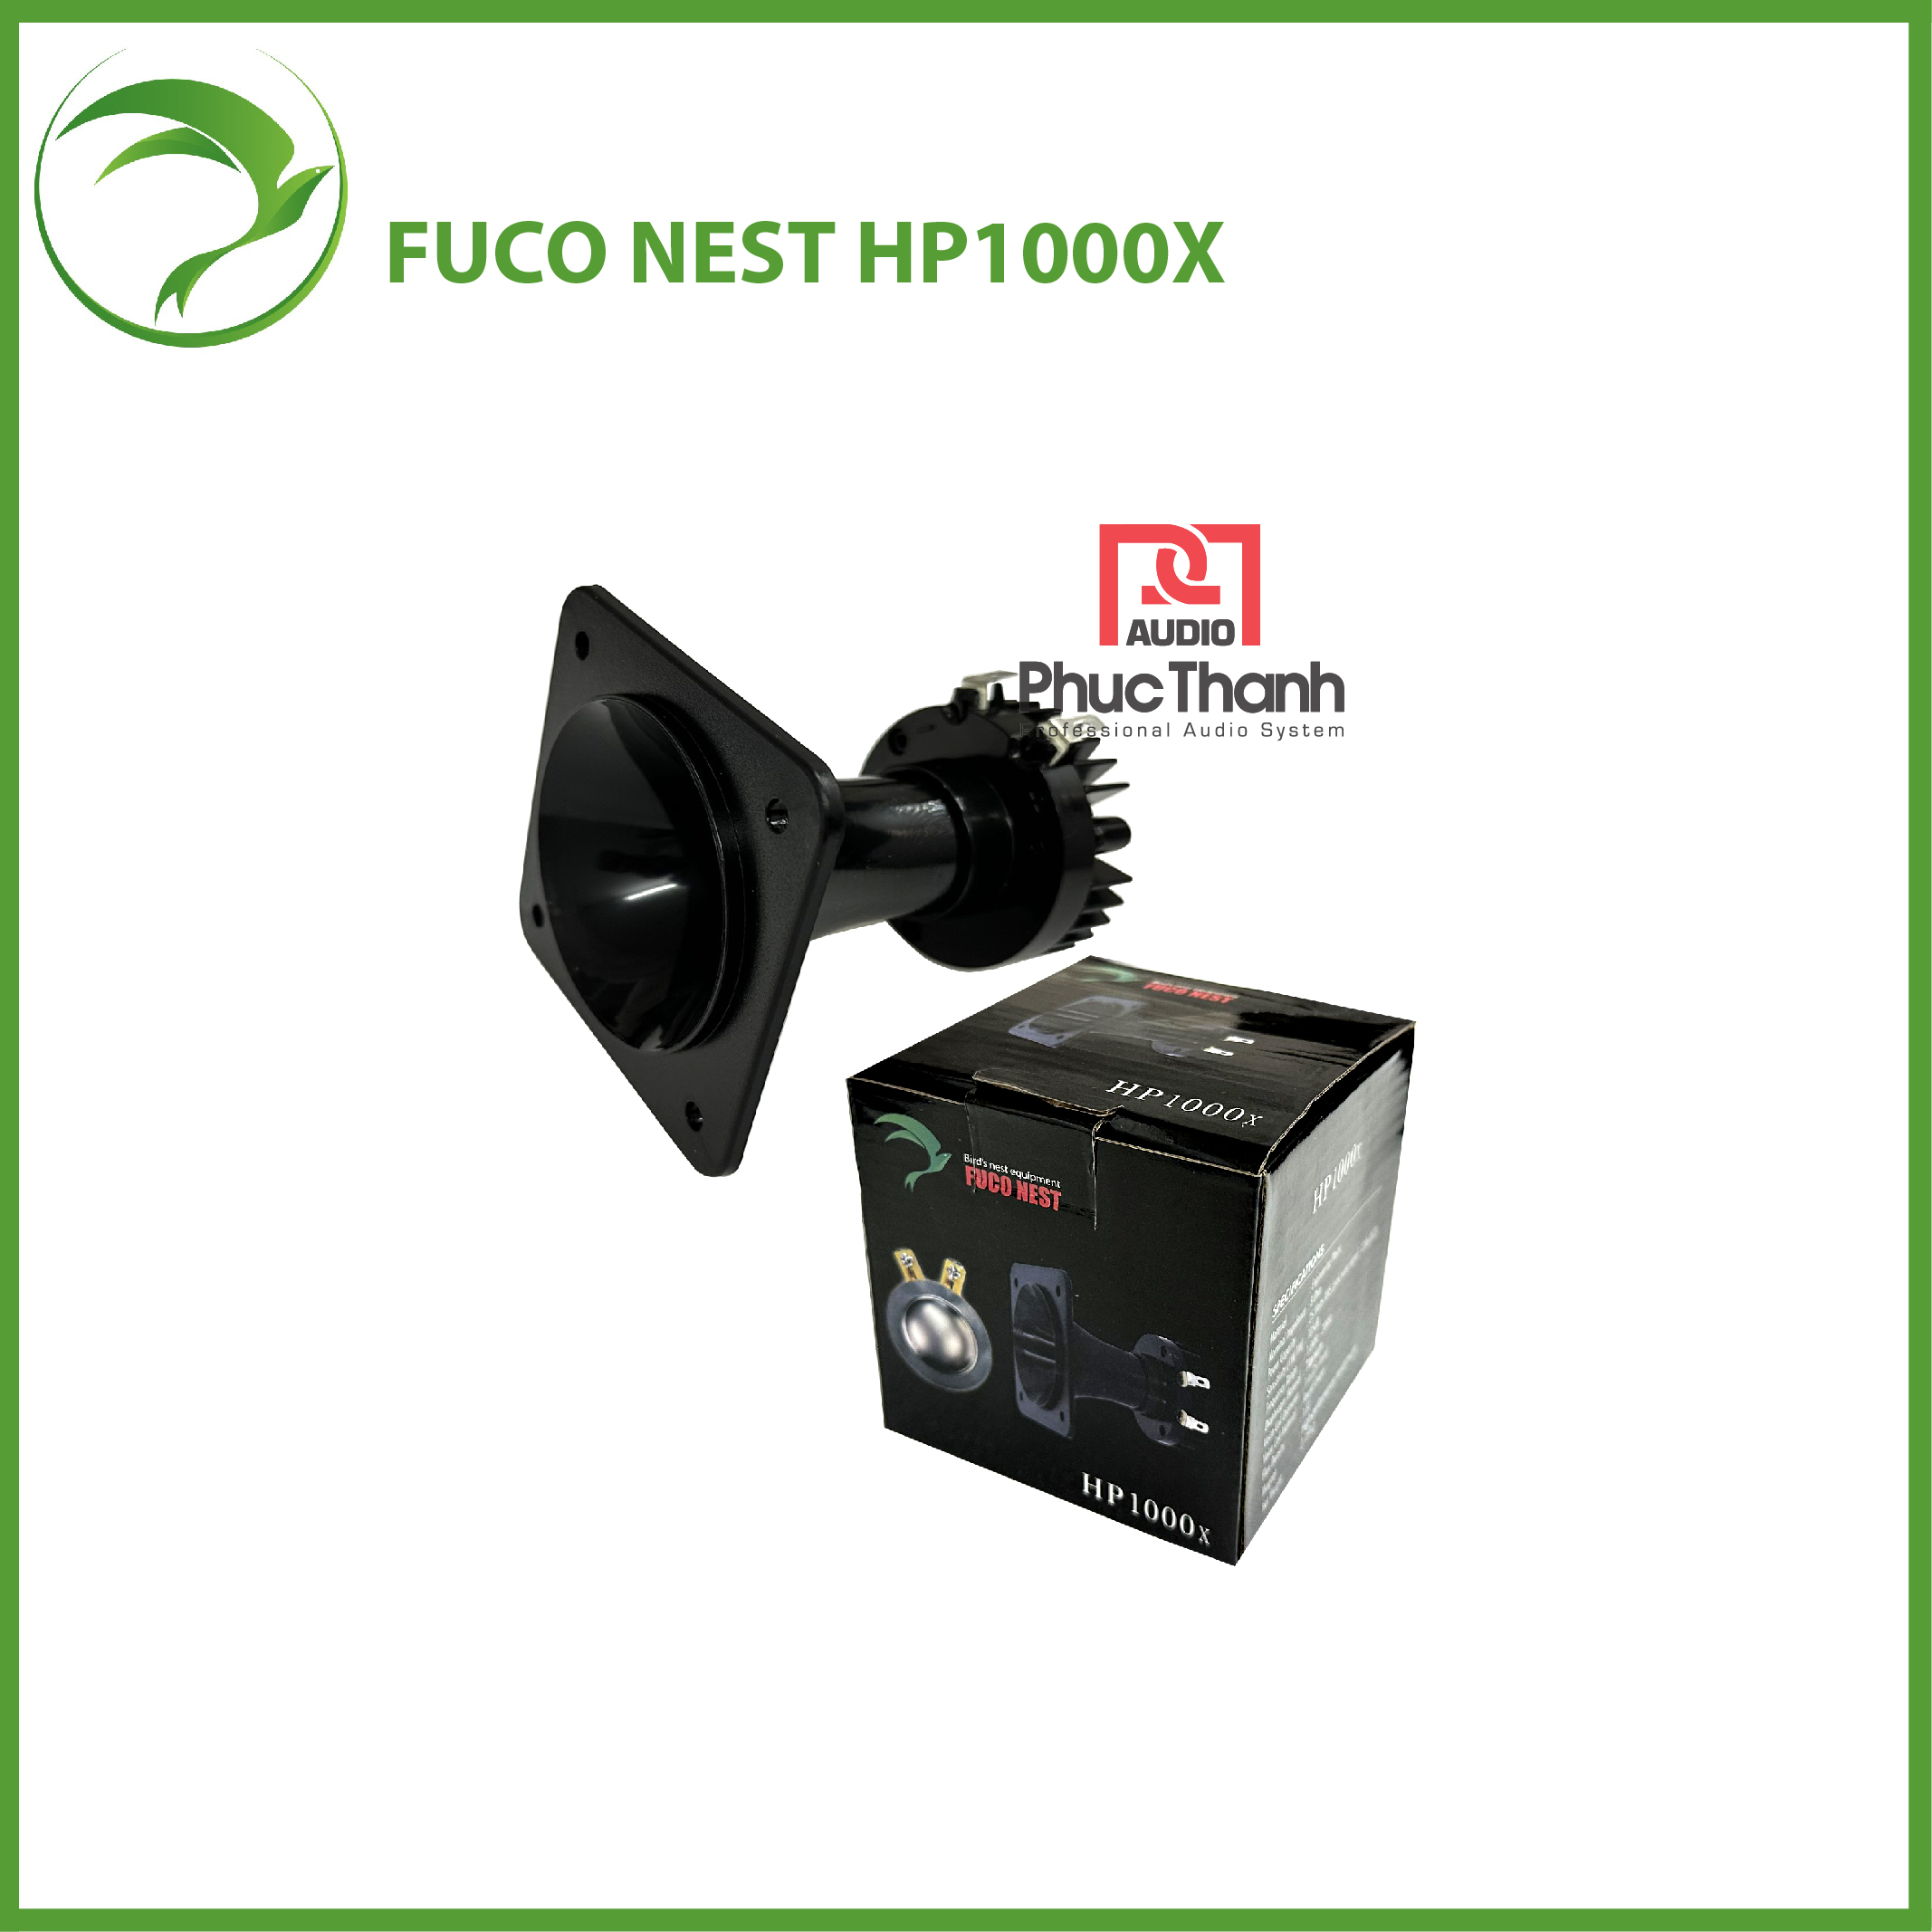 Loa Fuco Nest HP1000X